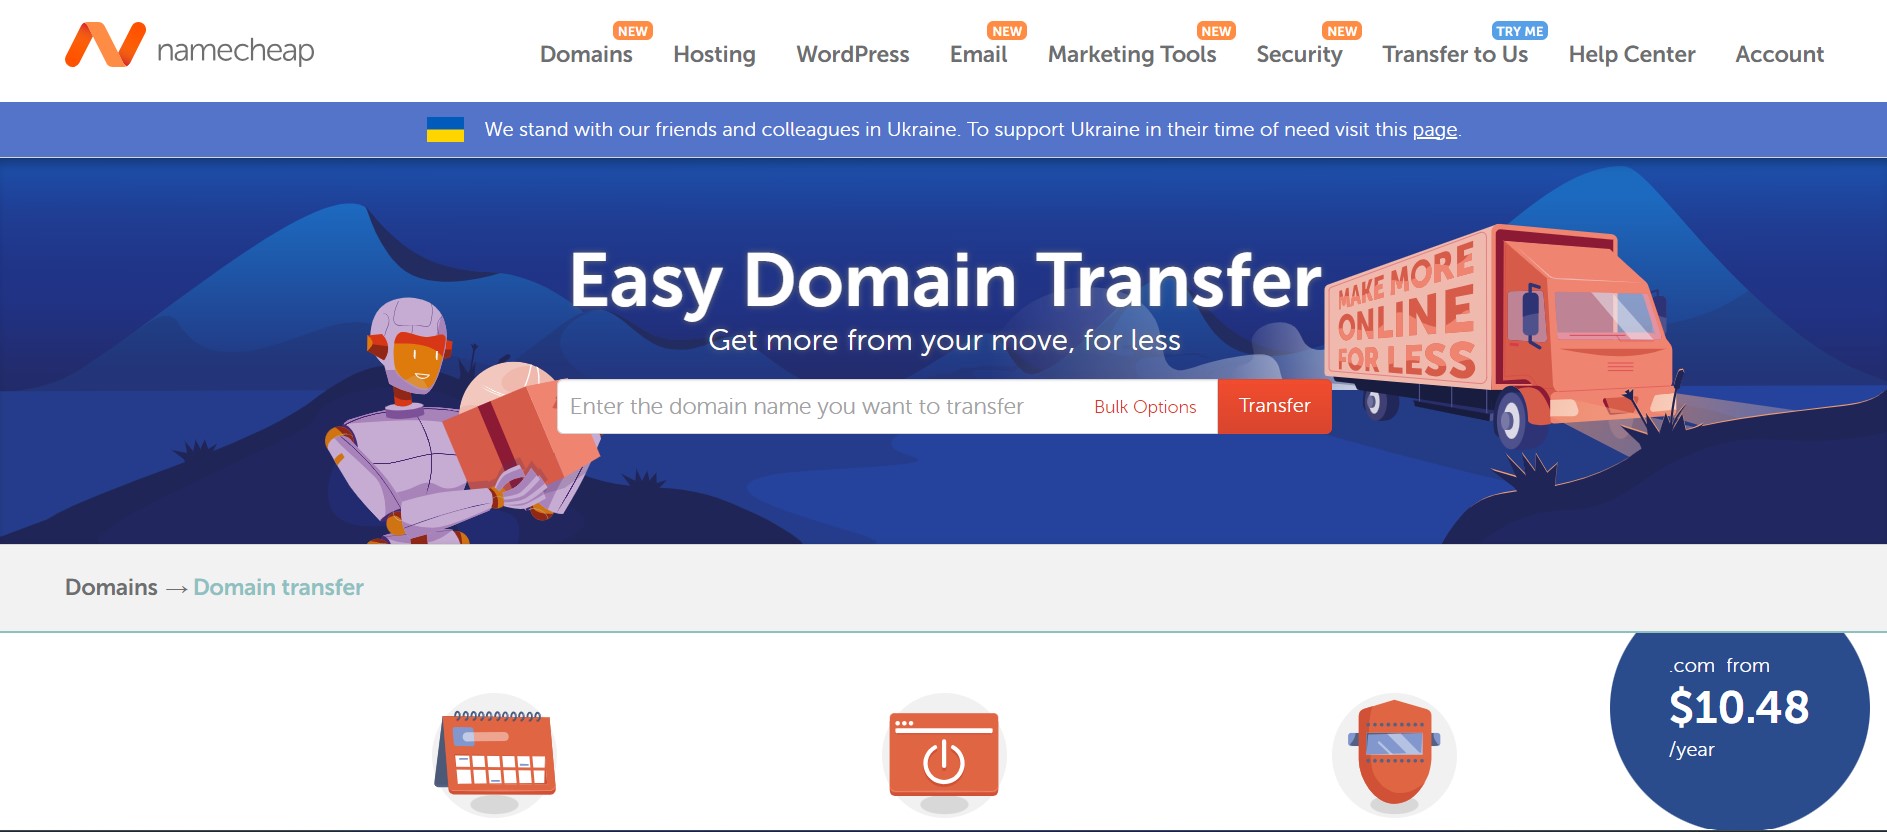 Namecheap domain transfer